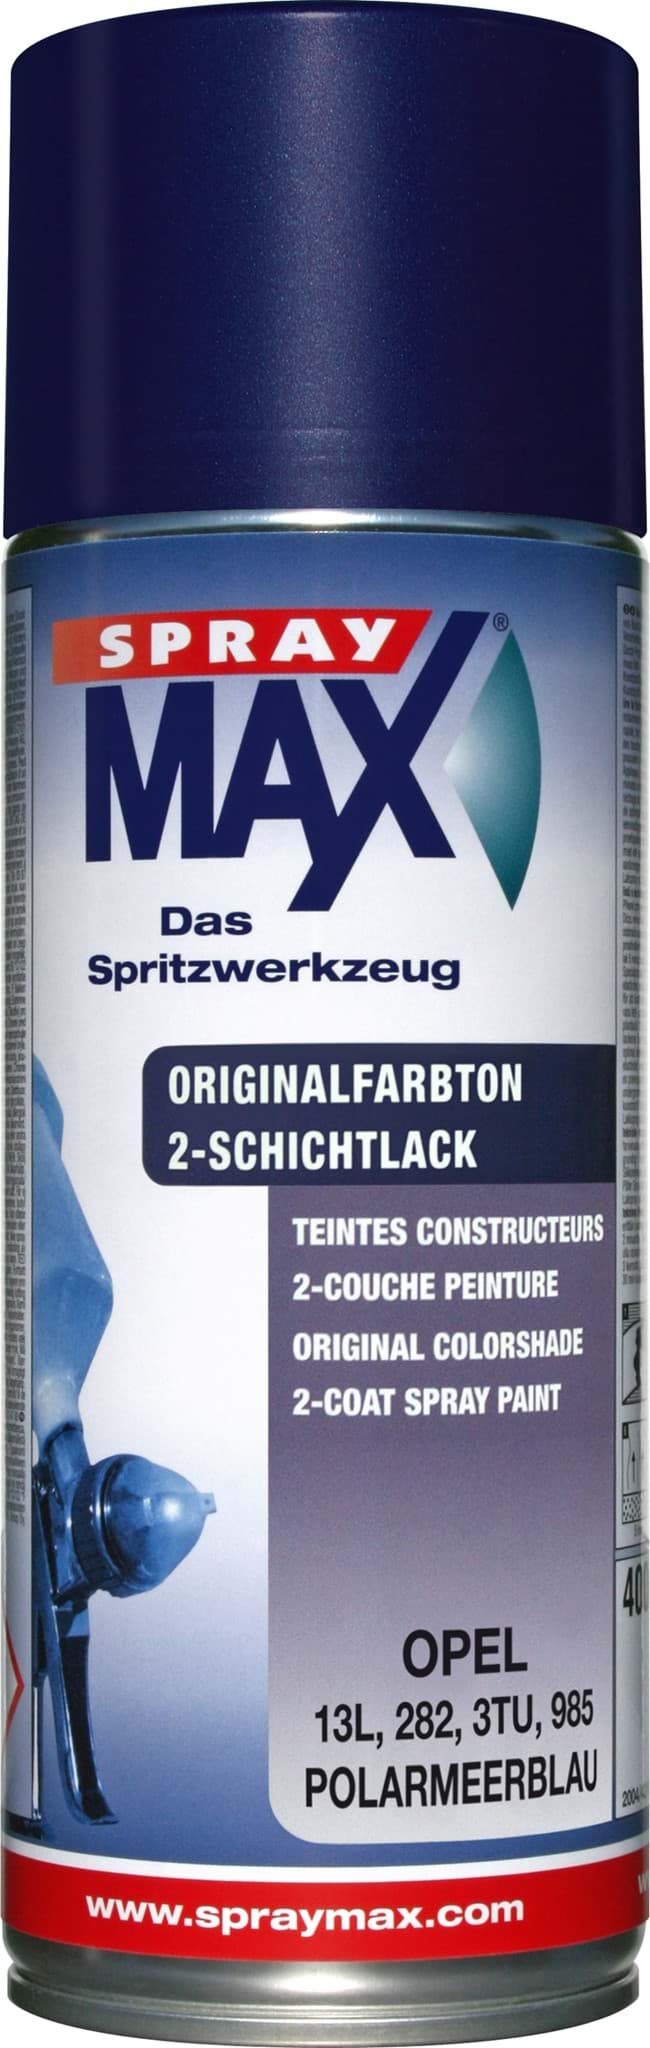 Изображение SprayMax Originalfarbton für Opel 282 polarmeerblau